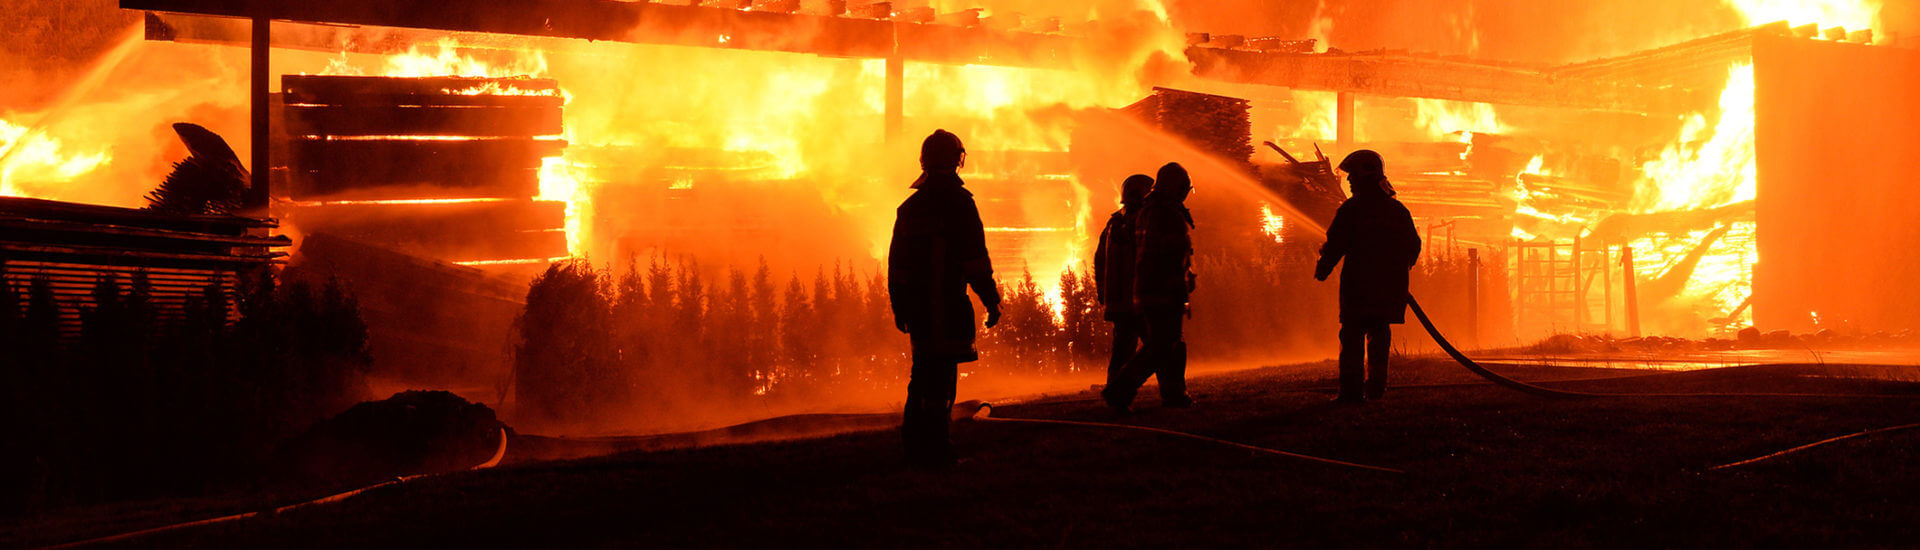 Firefighters in a major industrial fire